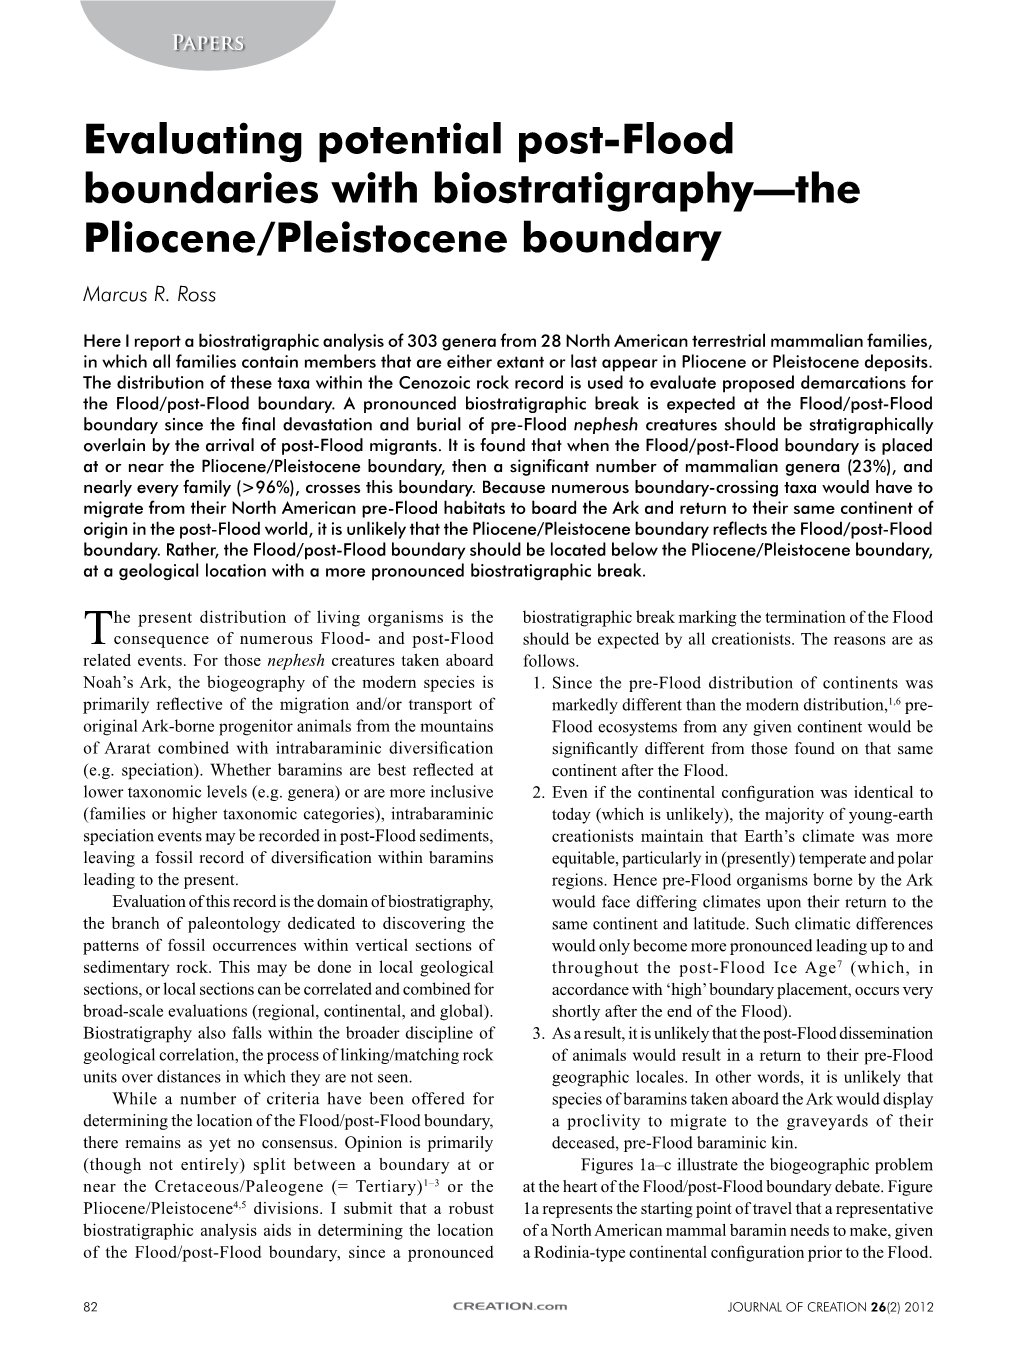 Evaluating Potential Post-Flood Boundaries with Biostratigraphy—The Pliocene/Pleistocene Boundary